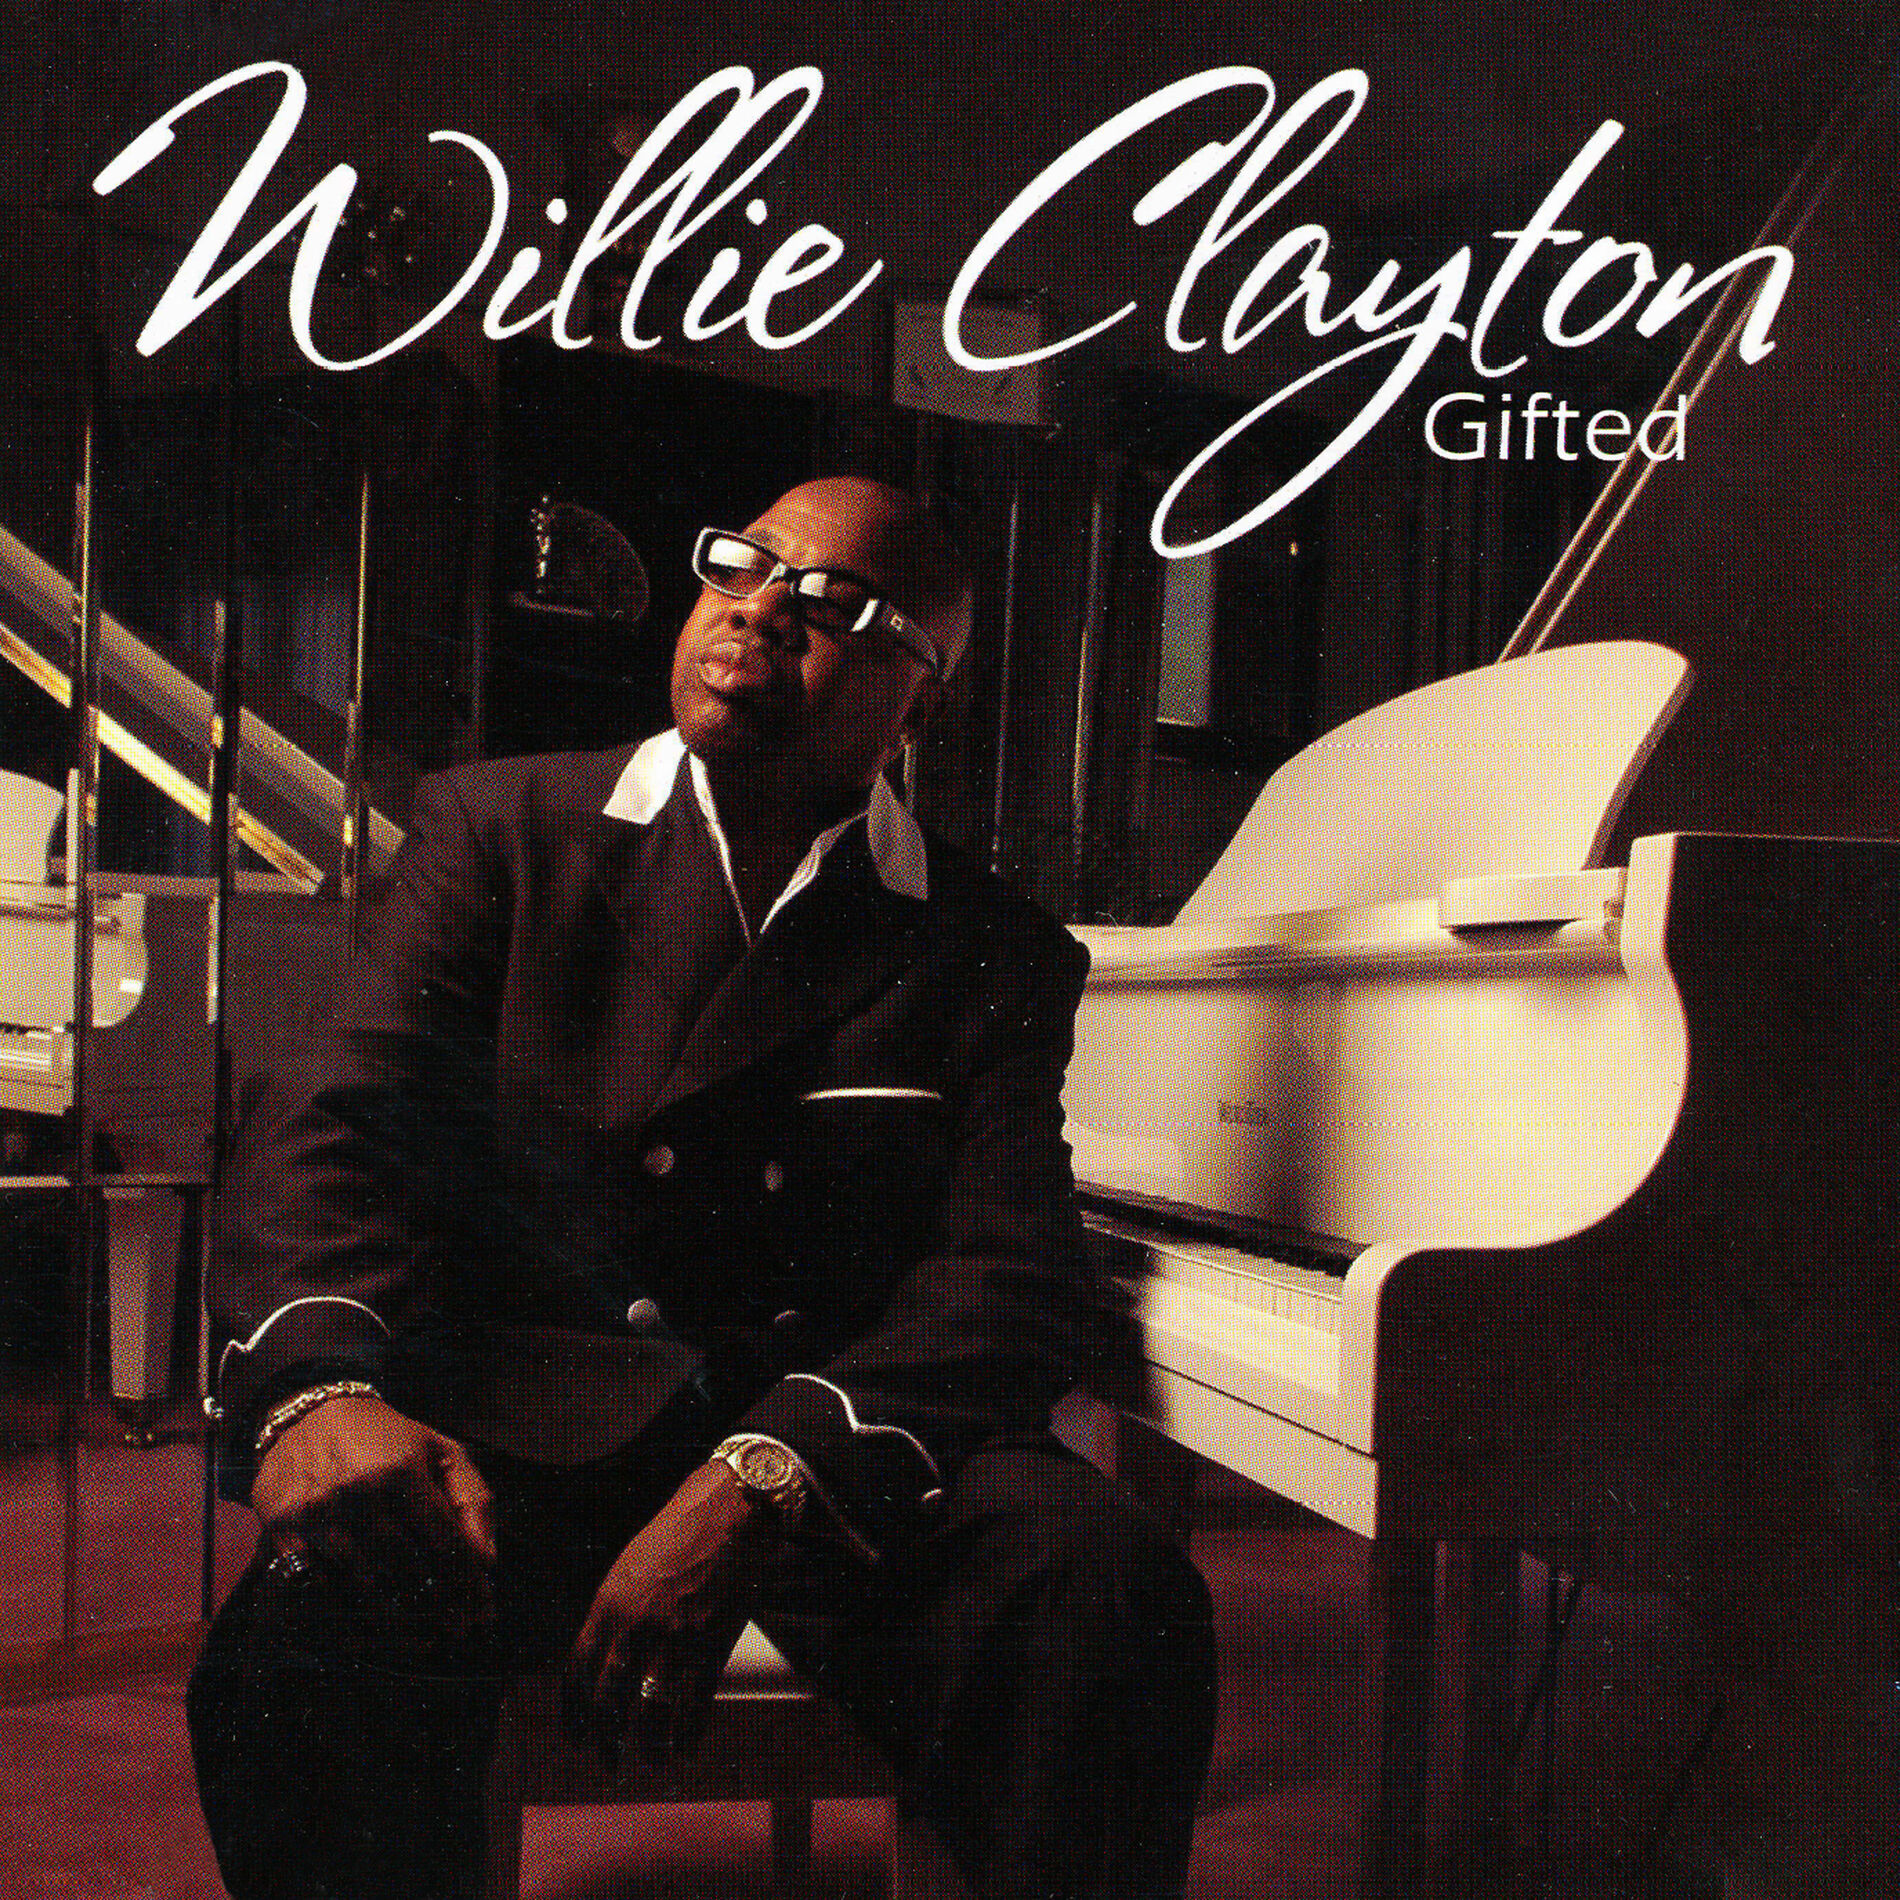 Willie Clayton: albums, songs, playlists | Listen on Deezer